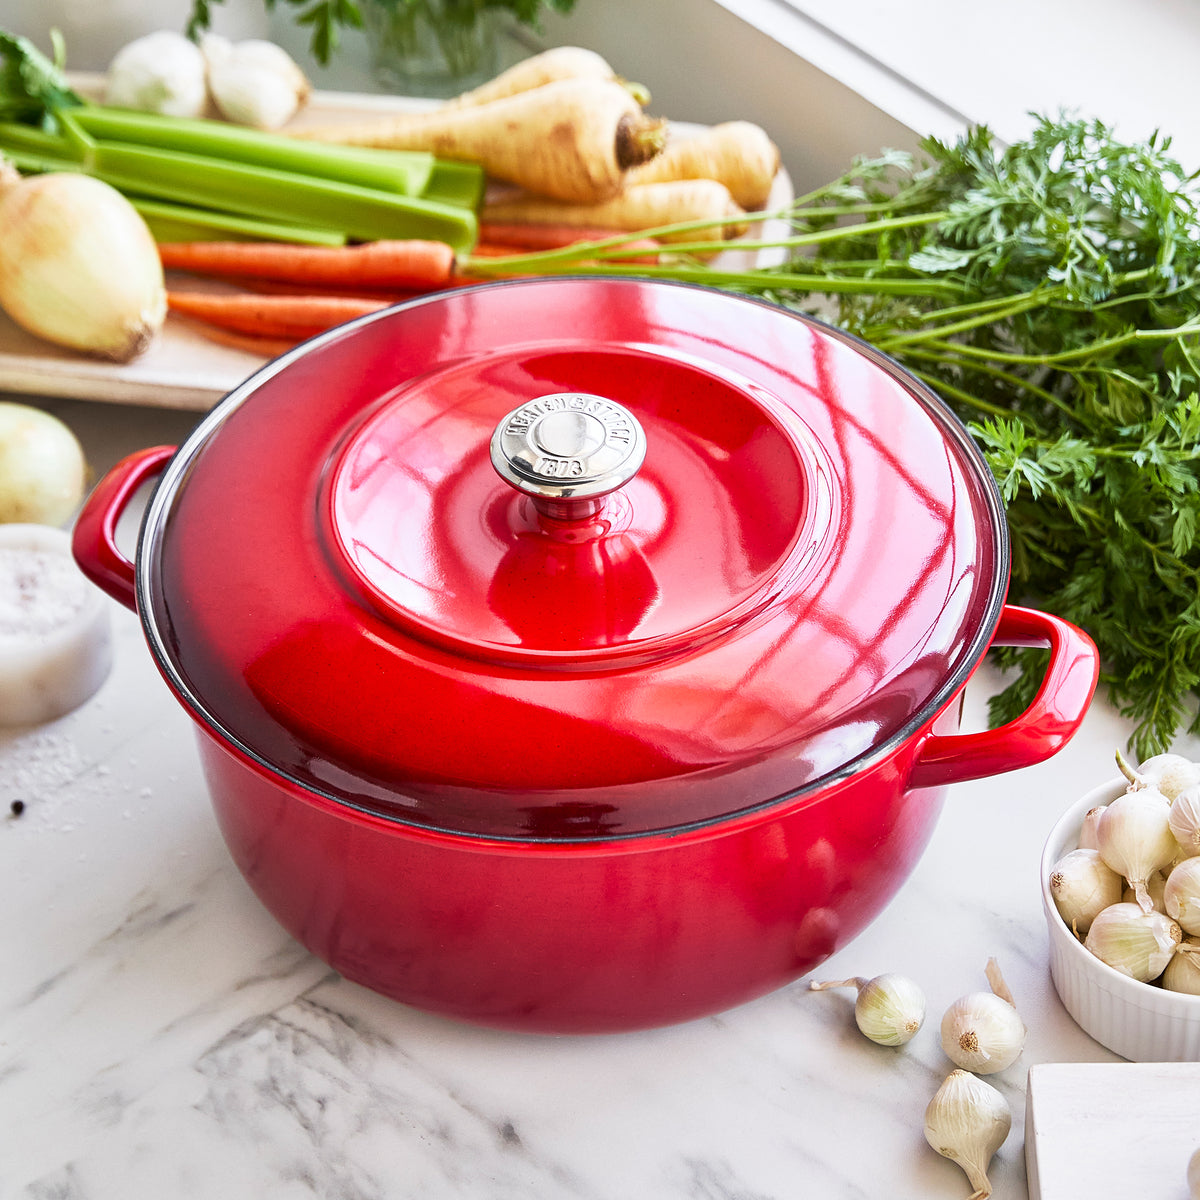 Instant™ Precision 6-quart Dutch Oven Cooking Pot, Red